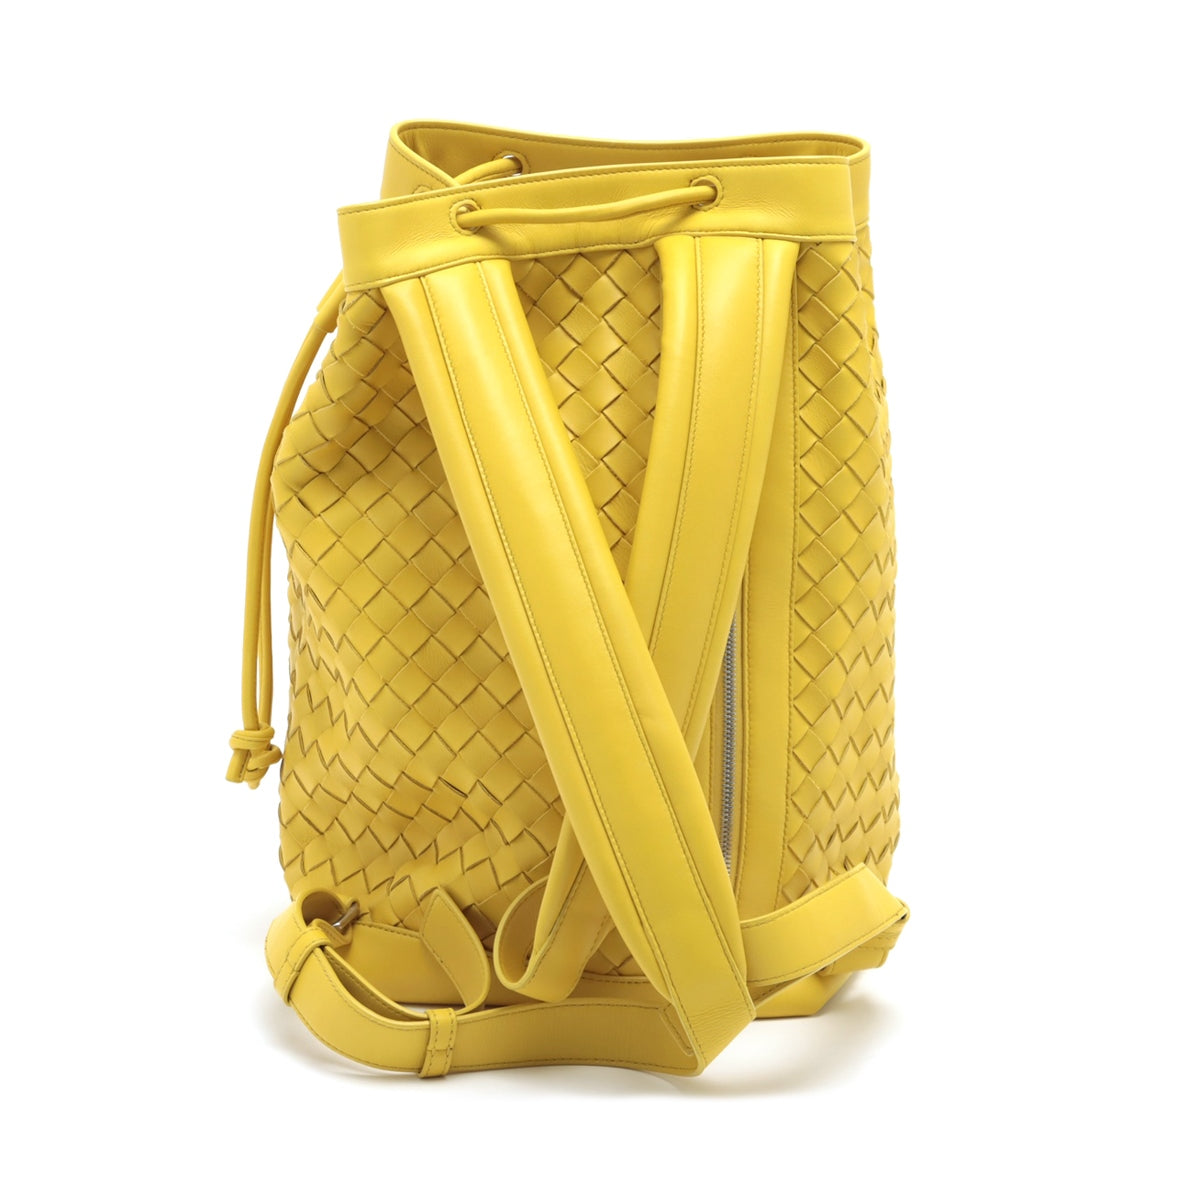 Bottega Veneta Intrecciato Leather Backpack Yellow